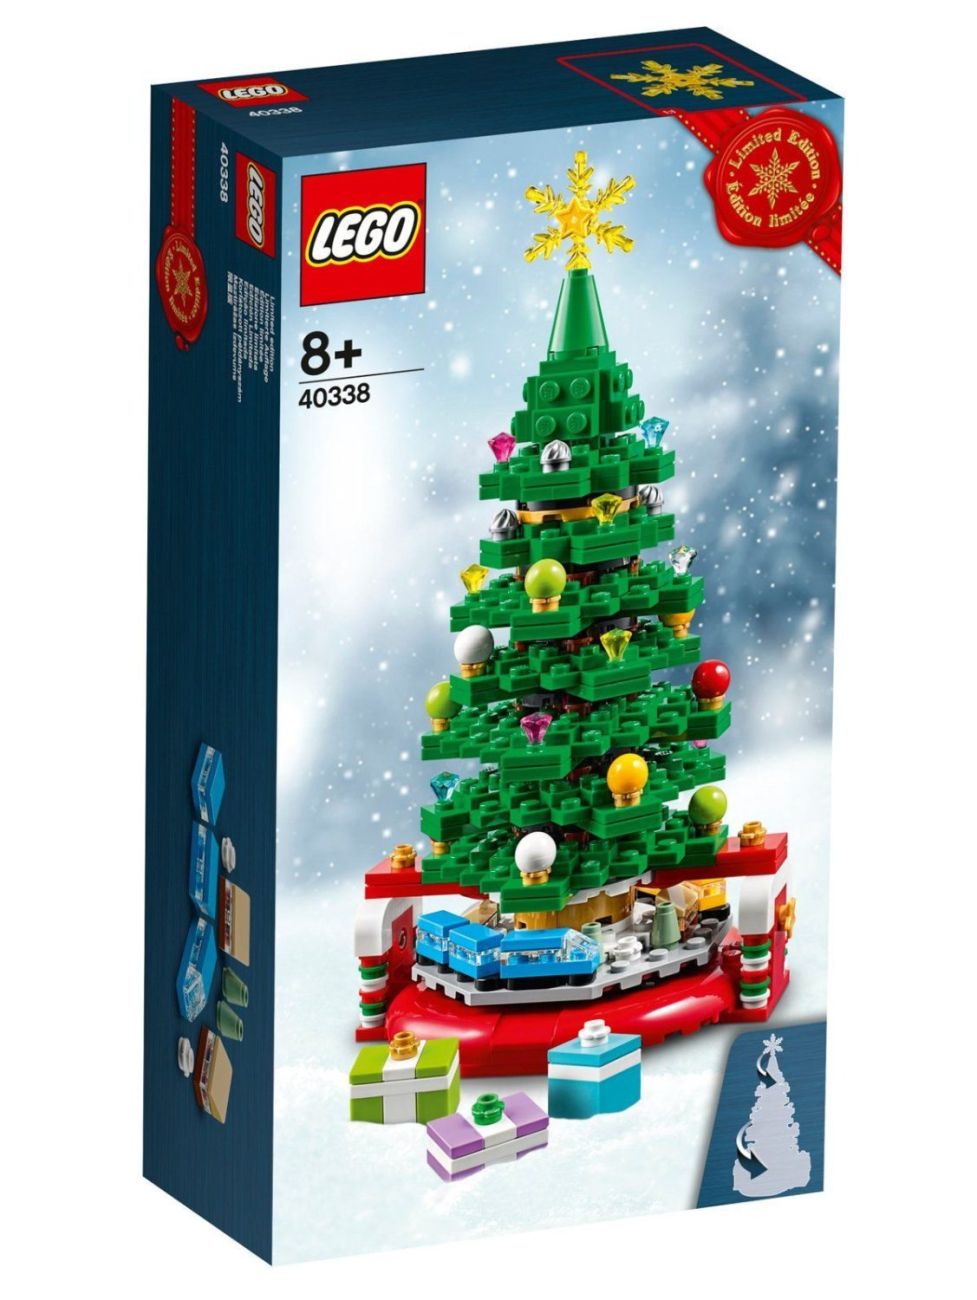 Lego 40338 Christmastree Limitededition 2